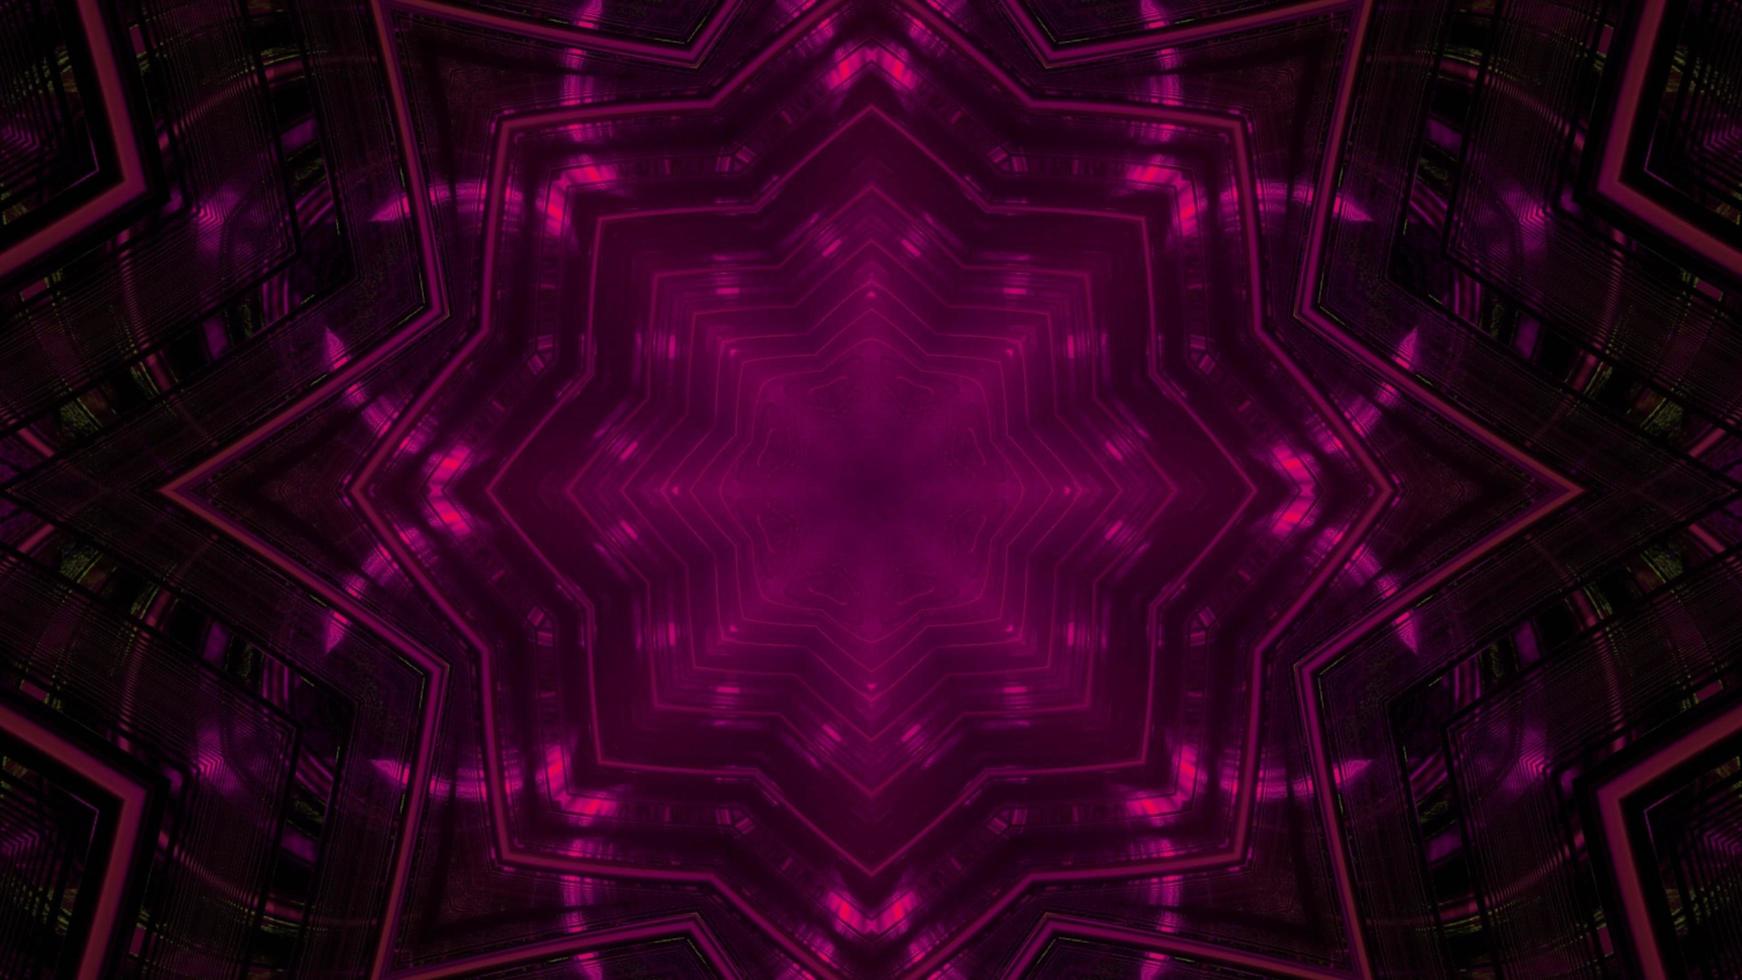 3d illustration du tunnel violet en forme de fleur photo